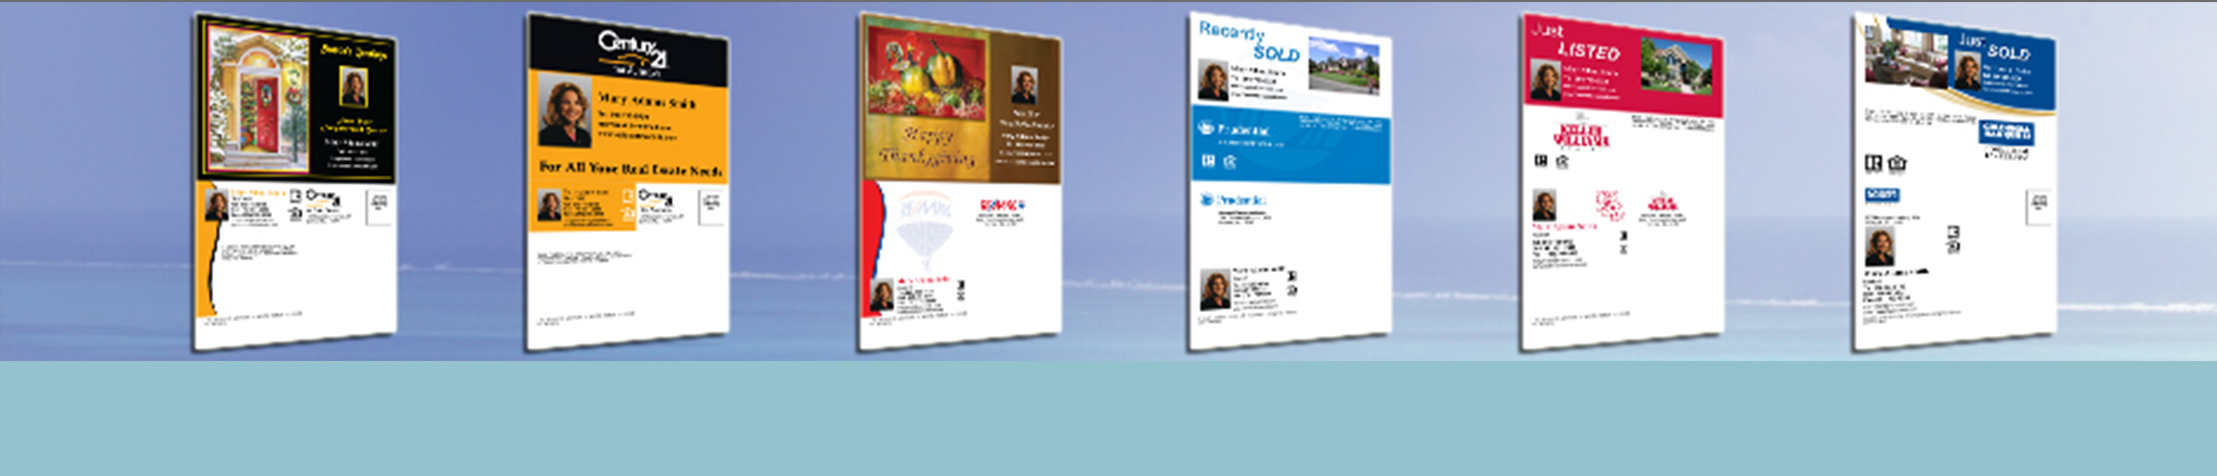 Real Estate Postcard Mailing â€“ Direct Mail Service